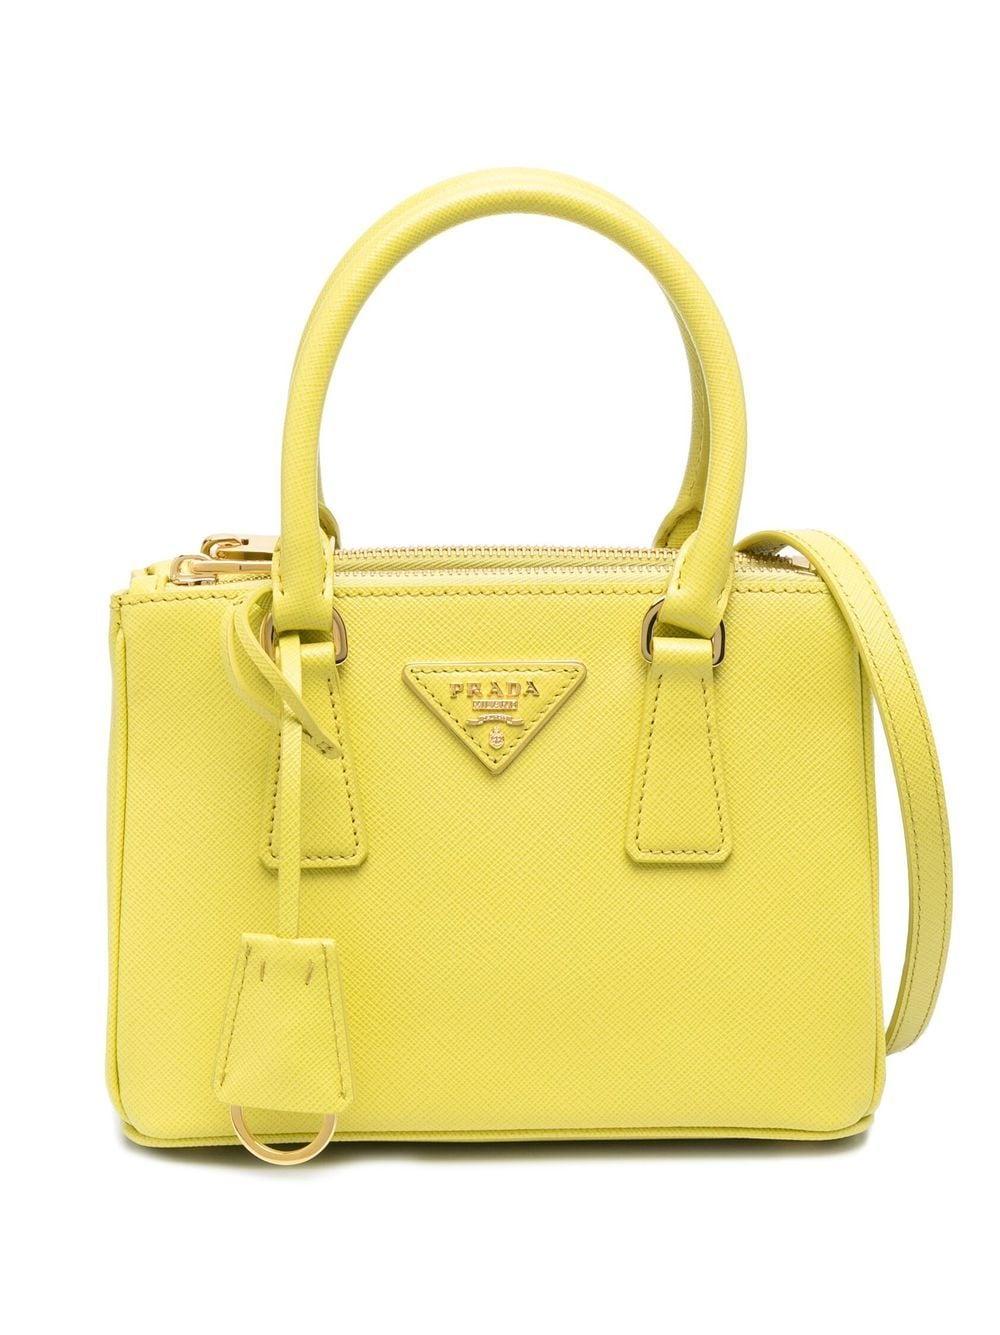 Prada Galleria Saffiano Leather Mini-bag in Yellow | Lyst